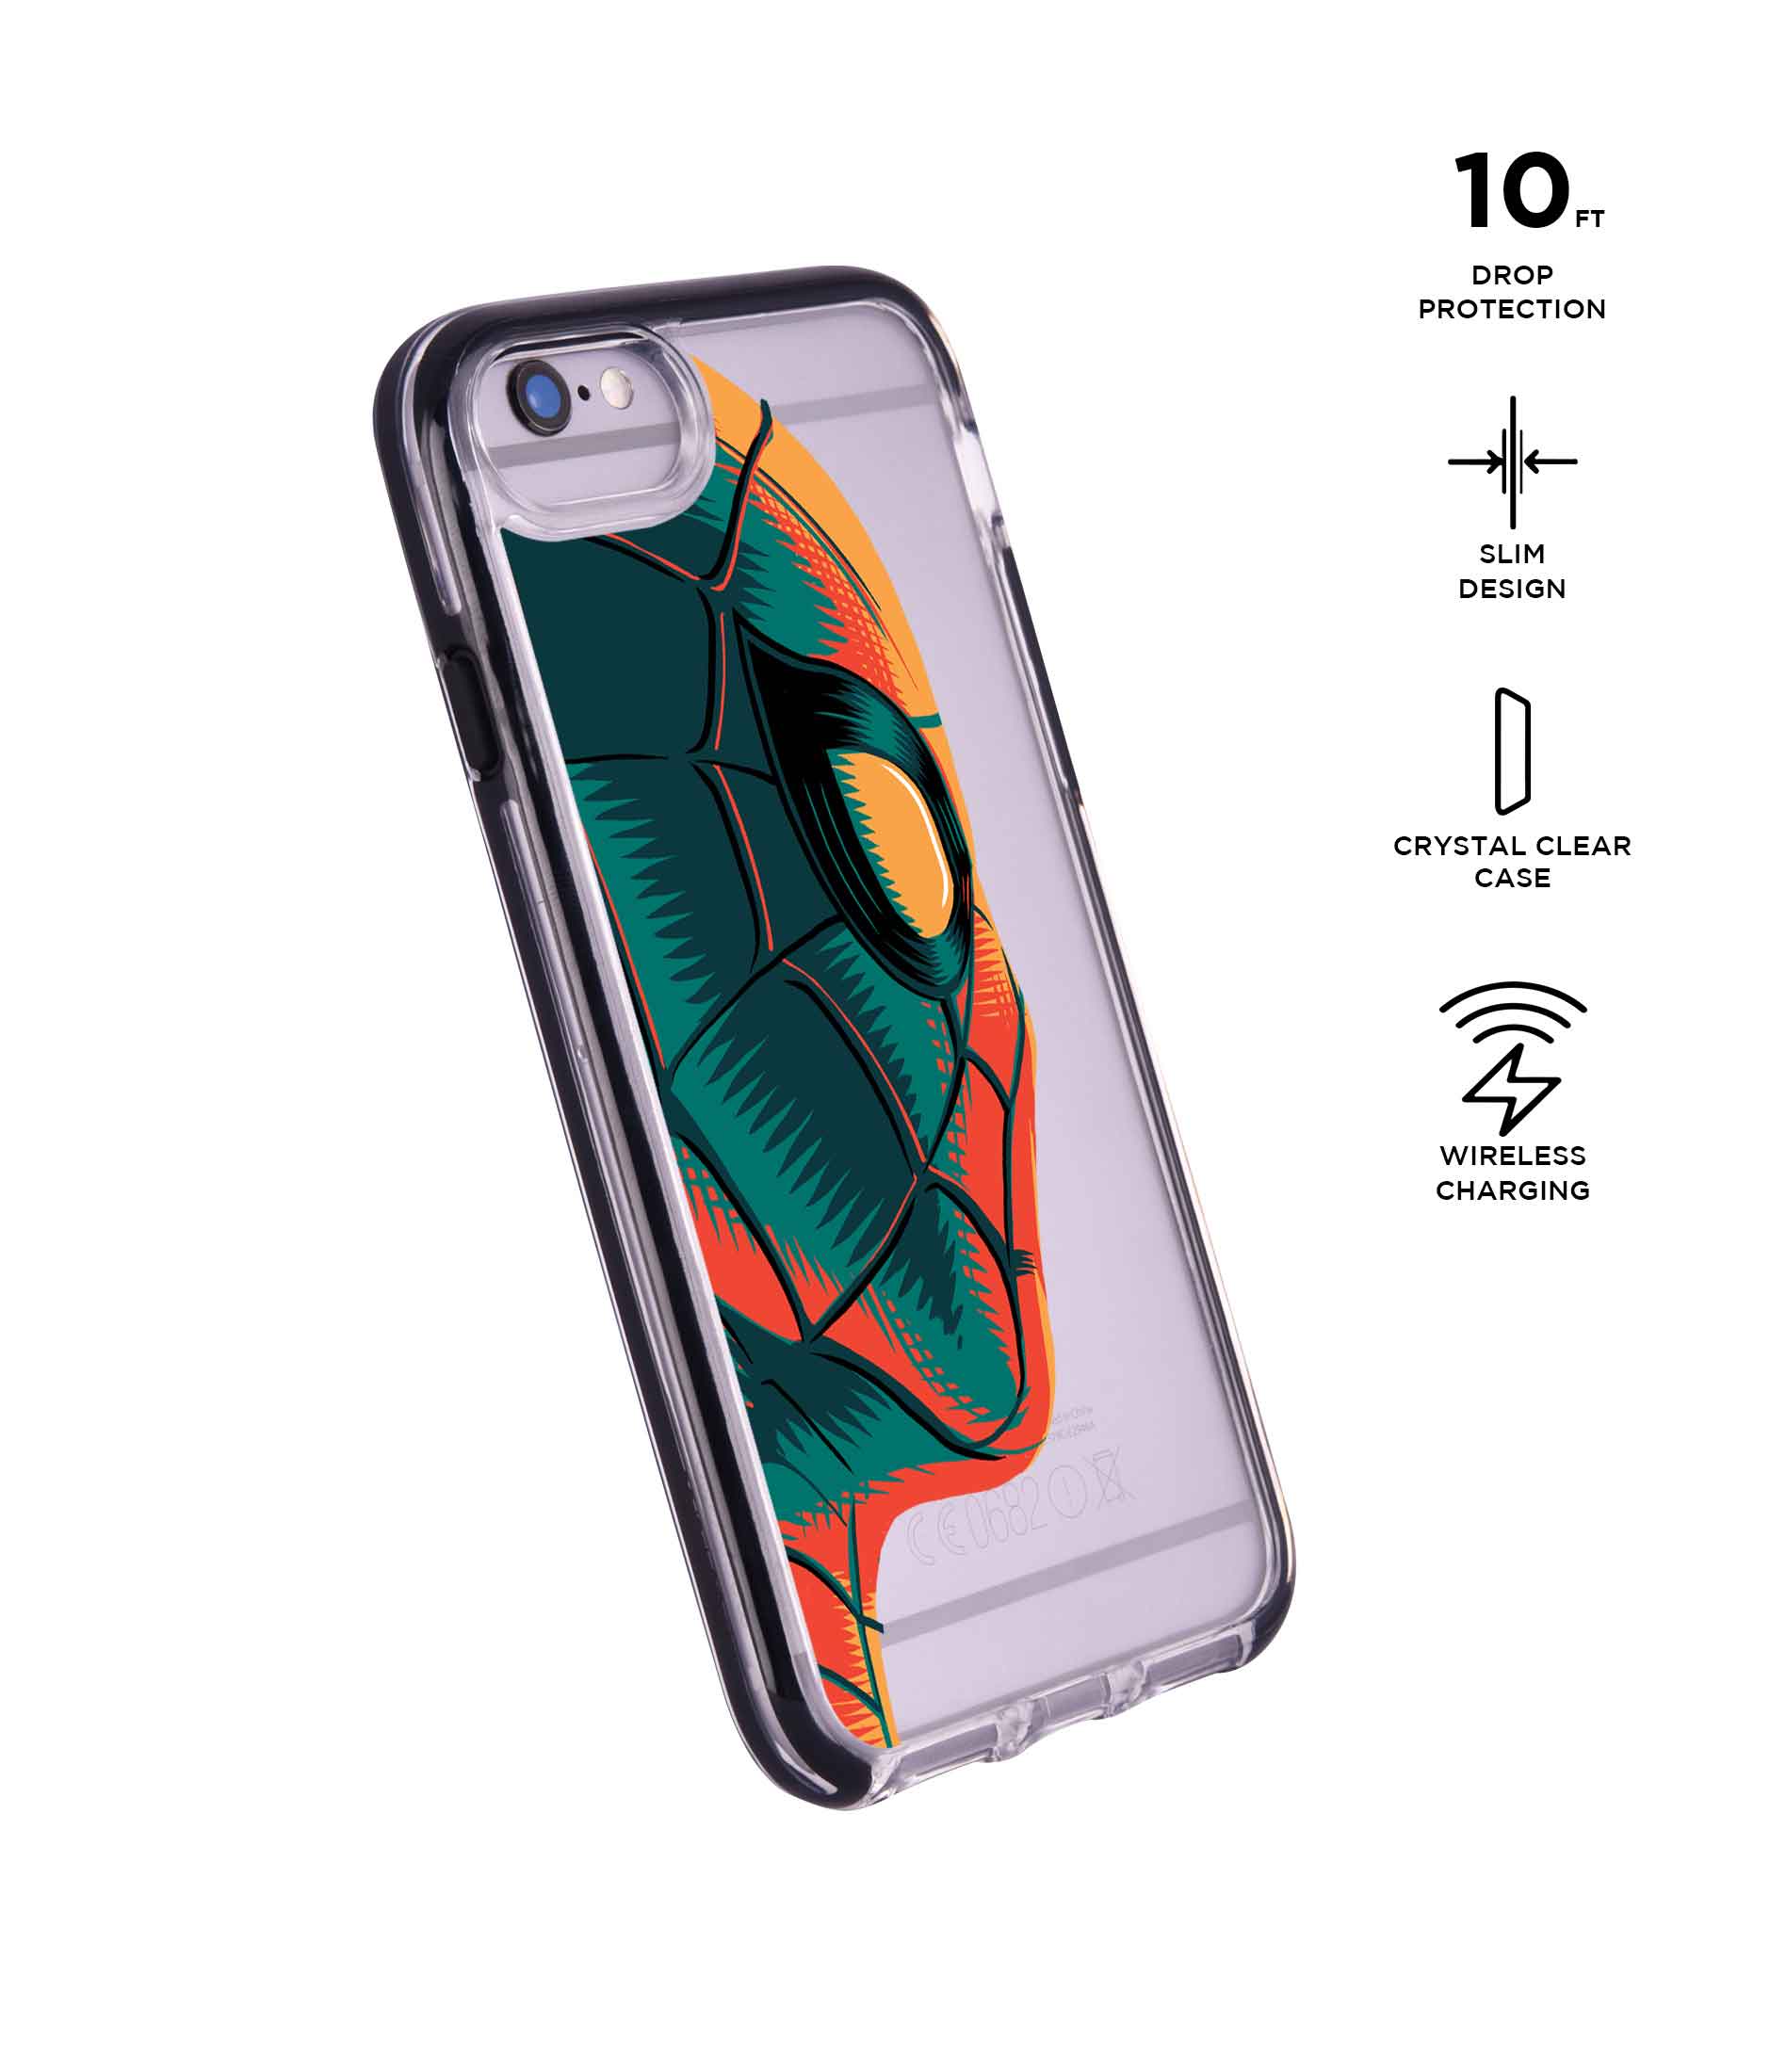 Illuminated Spiderman - Extreme Phone Case for iPhone 6